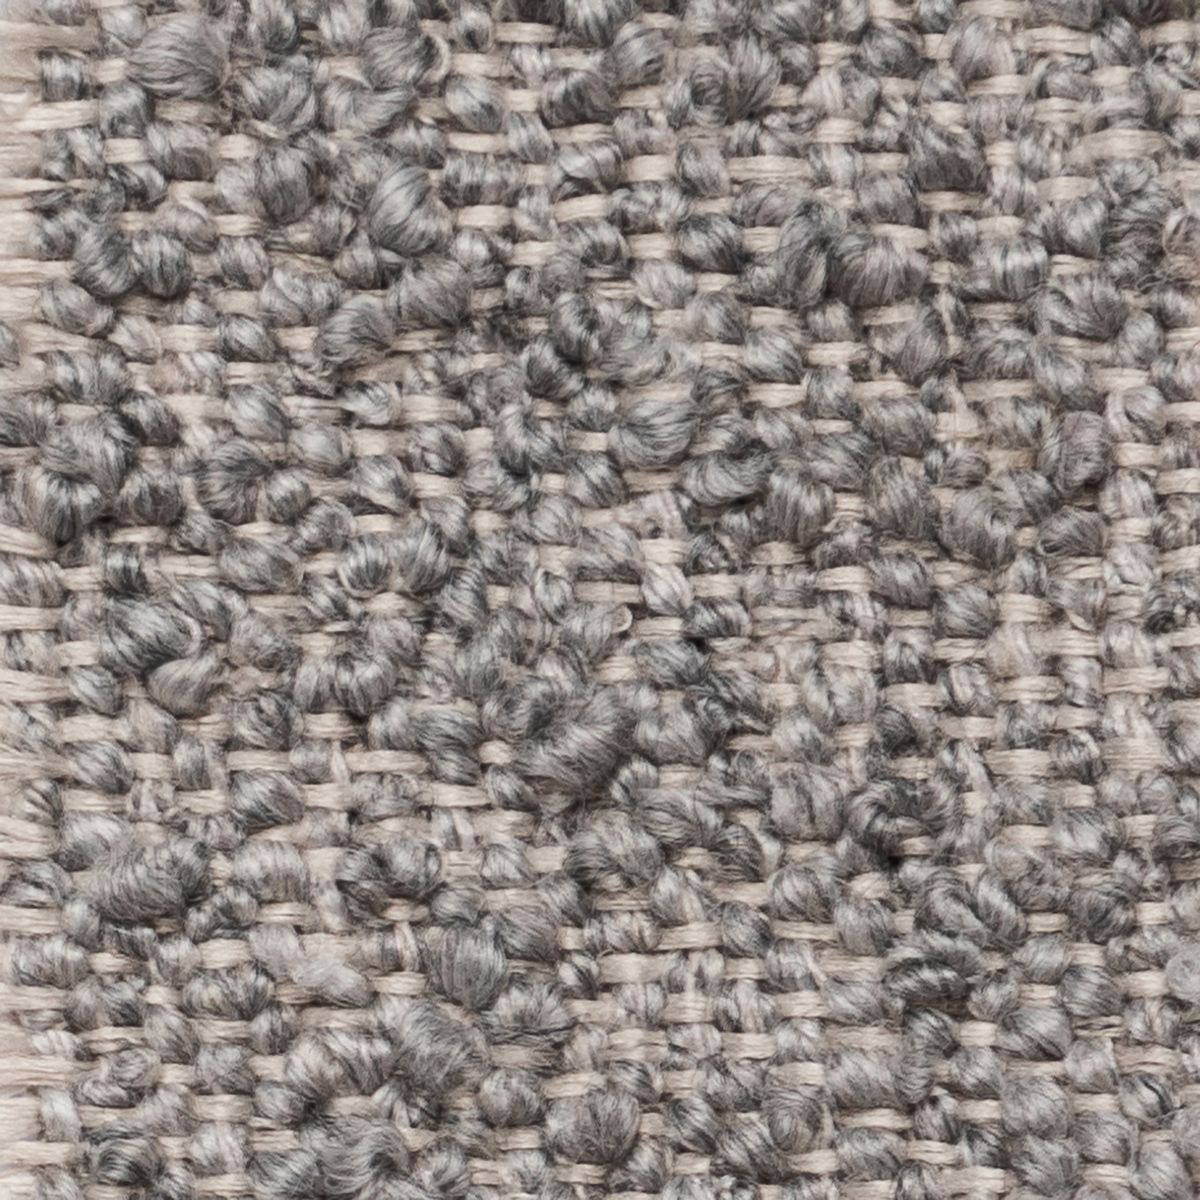 Dixon Mole Fabric by Voyage Maison